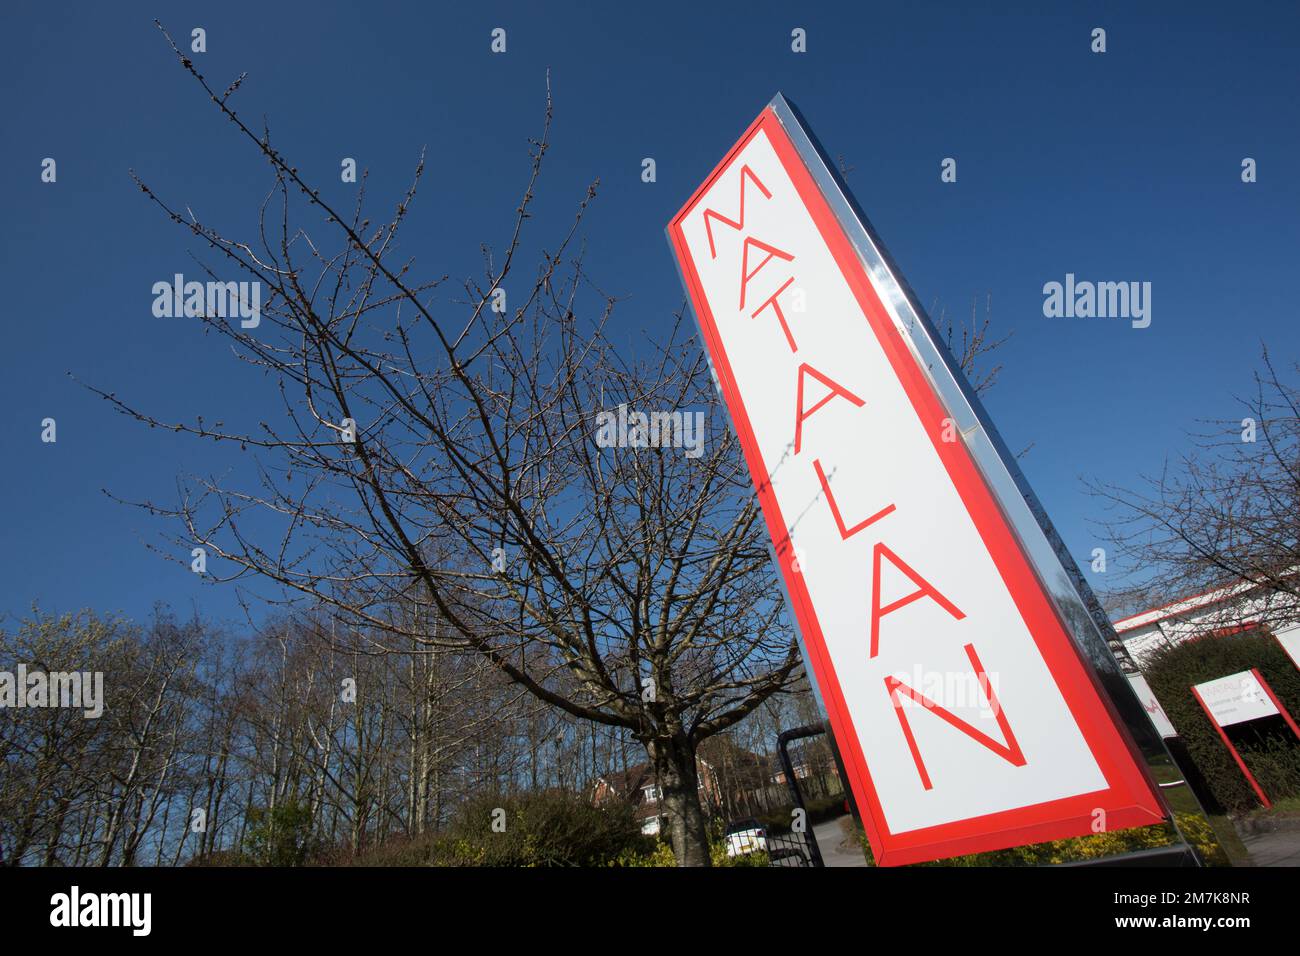 Matalan signage Stock Photo